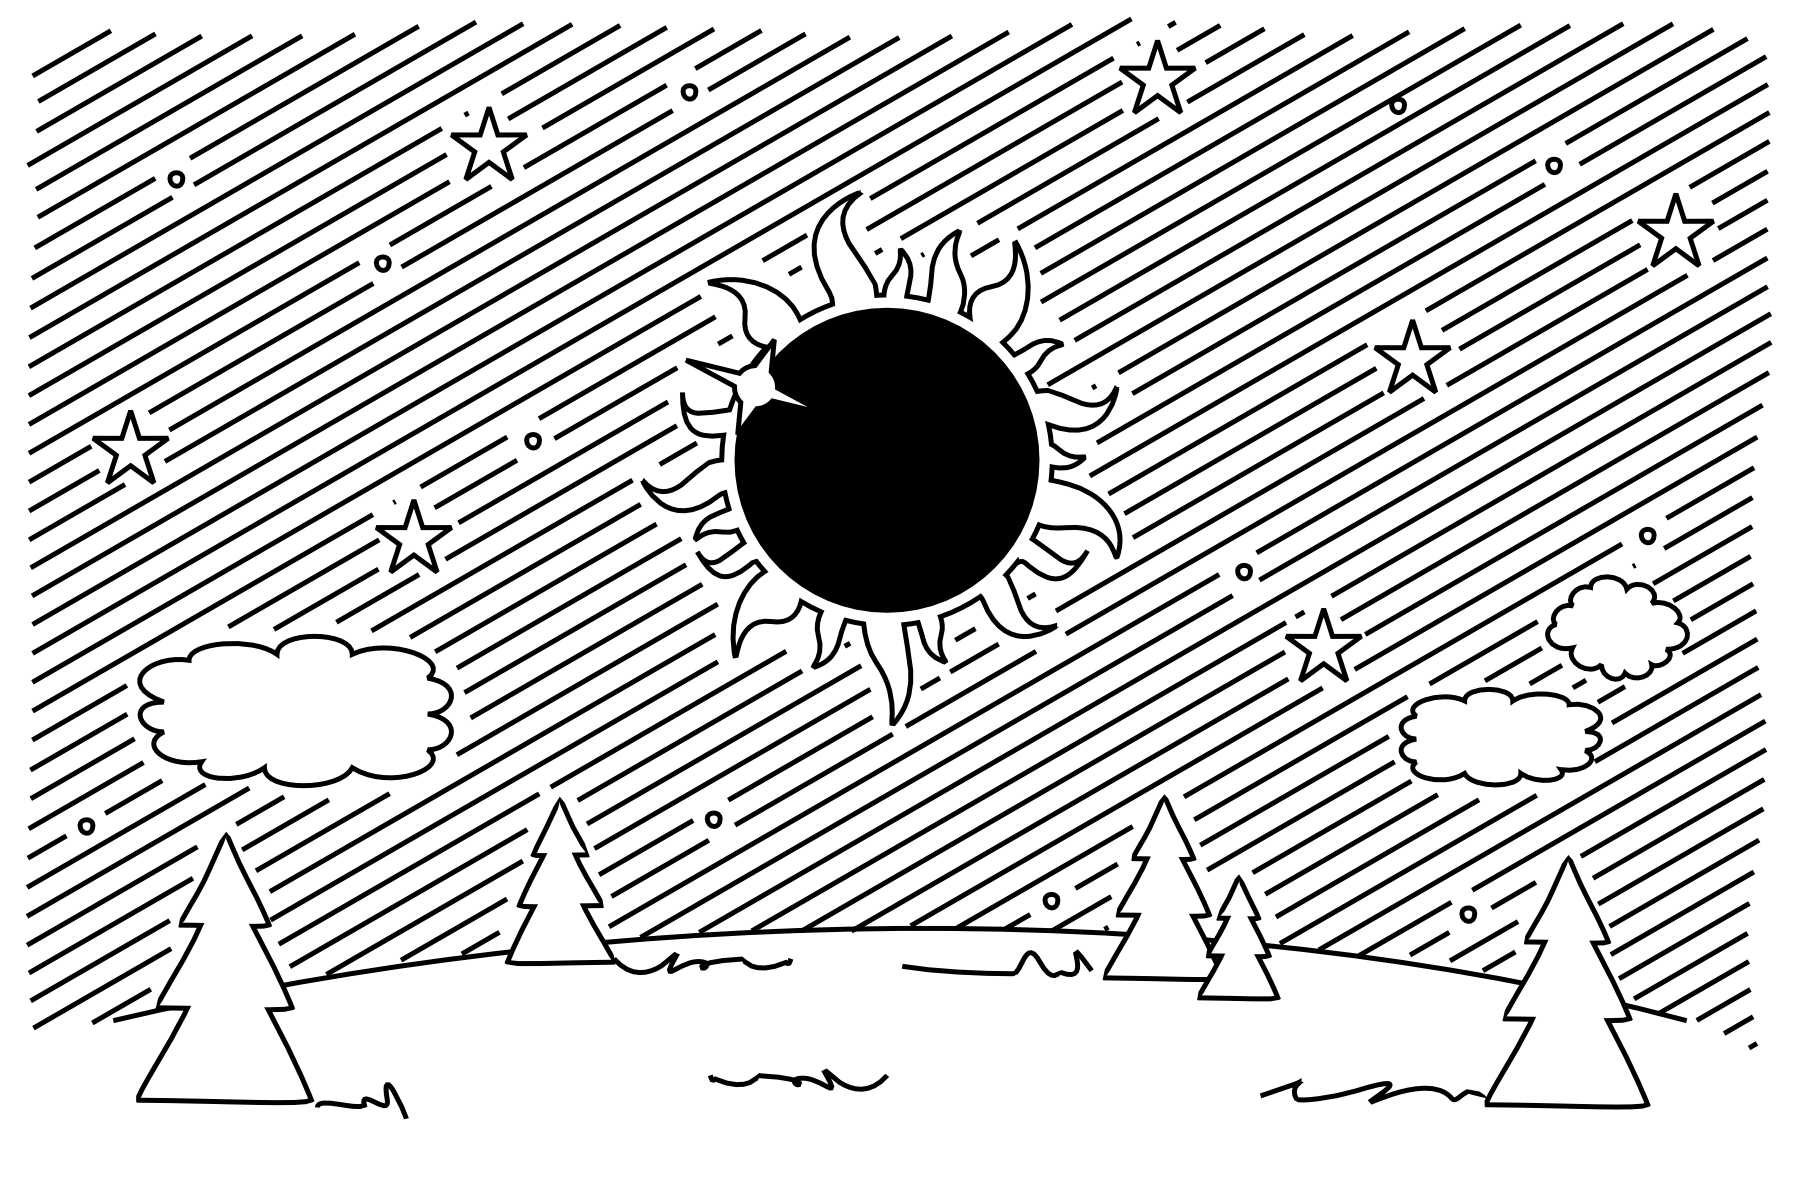 Solar Eclipse by Allan Wolf